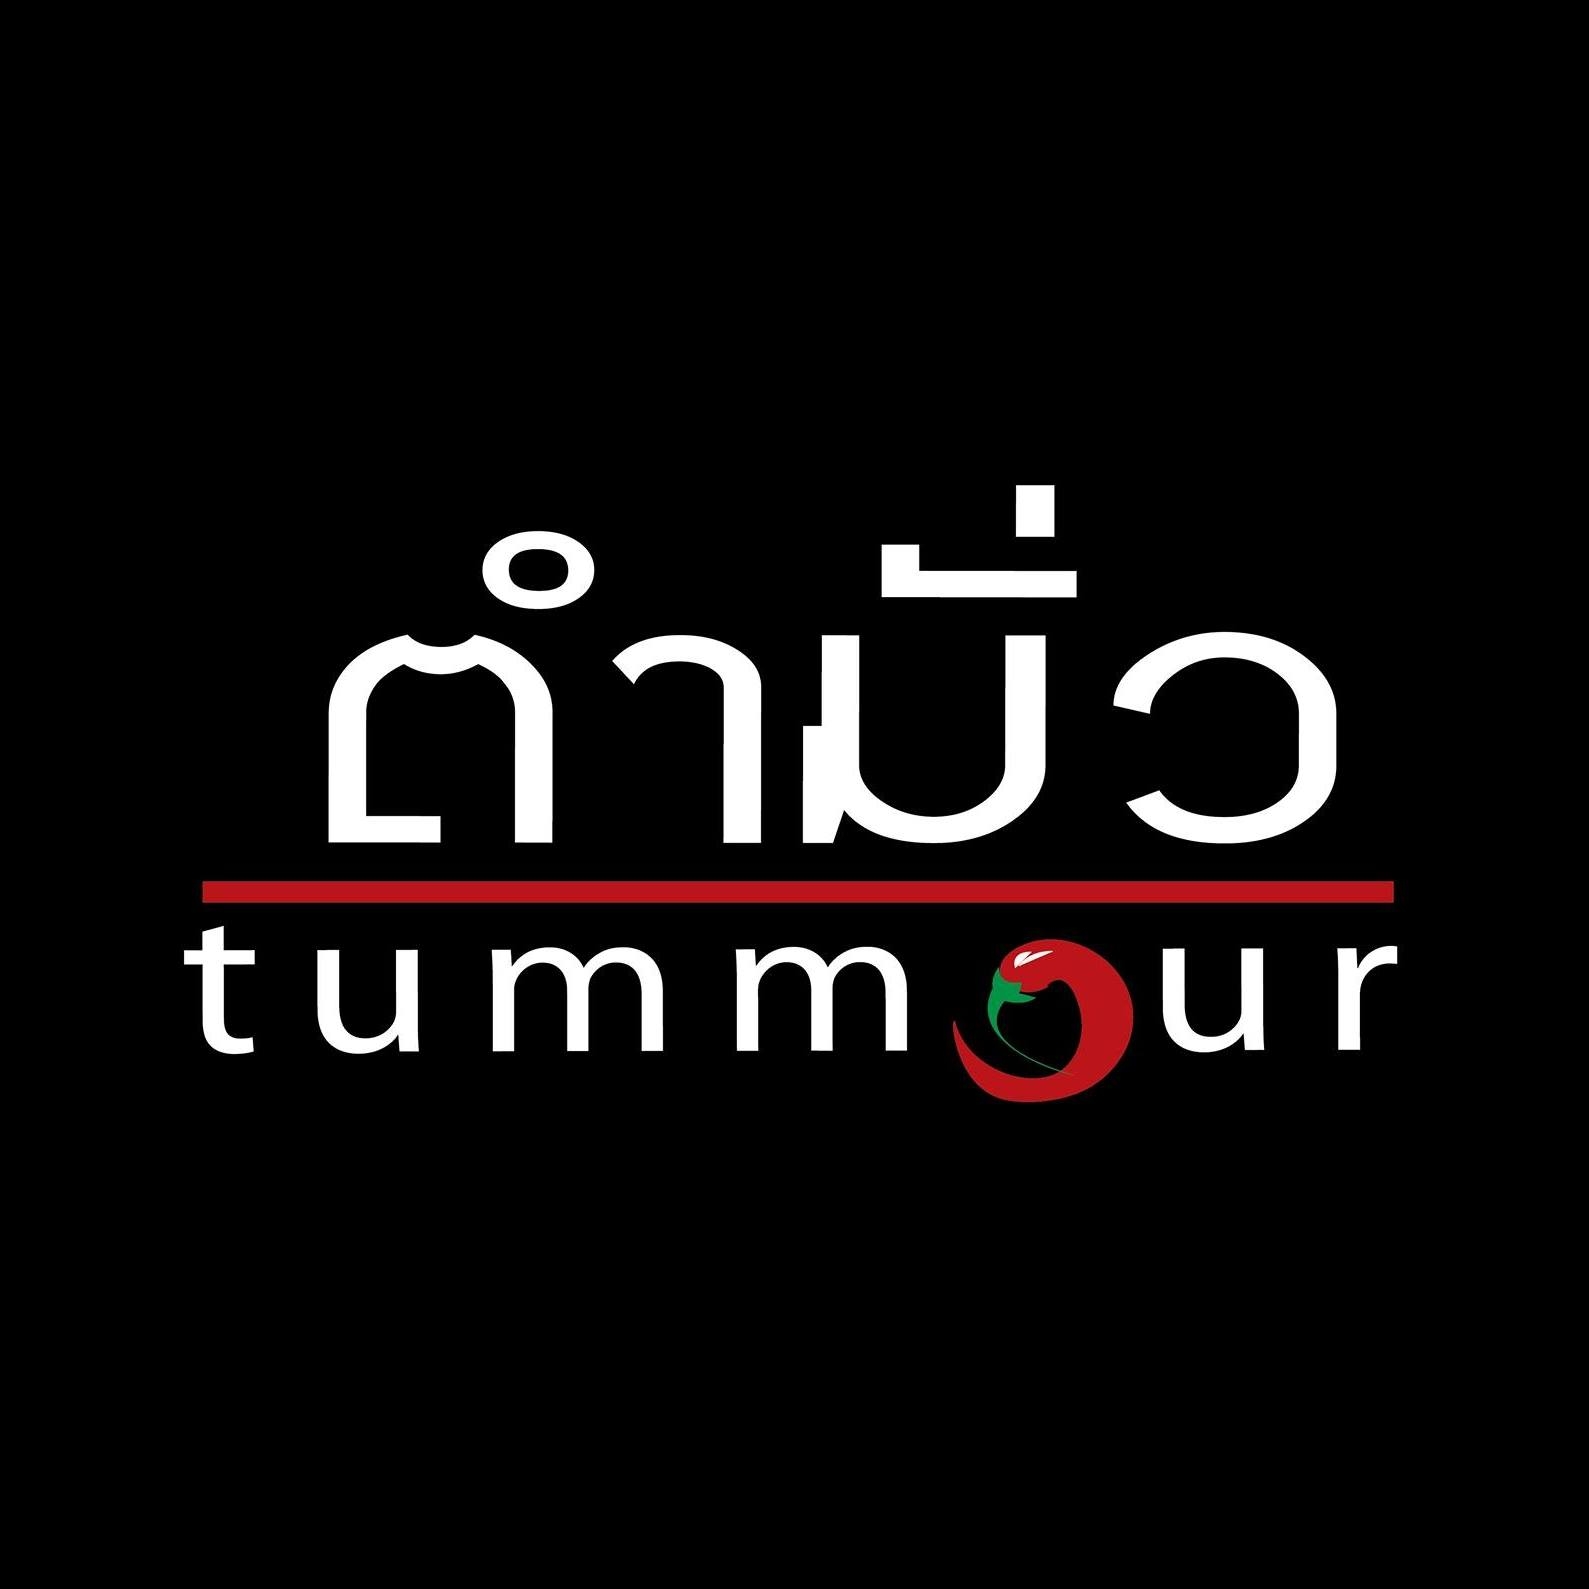 Tummour (ตำมั่ว)